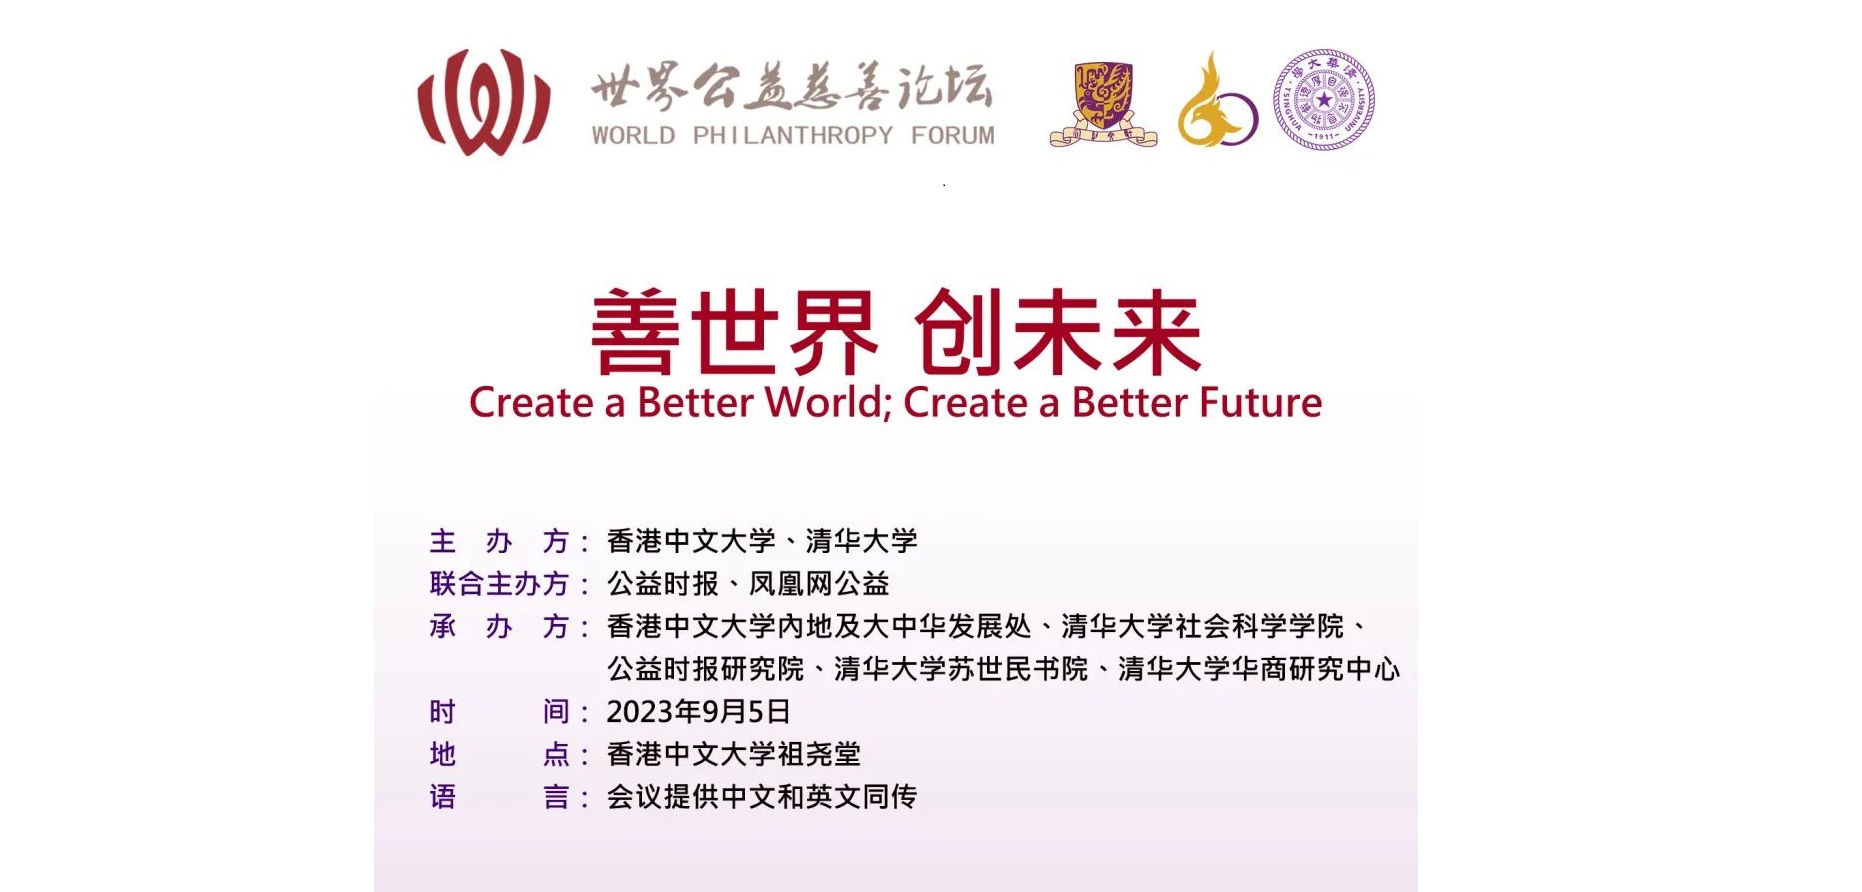 The 6th World Philanthropy Forum Banner